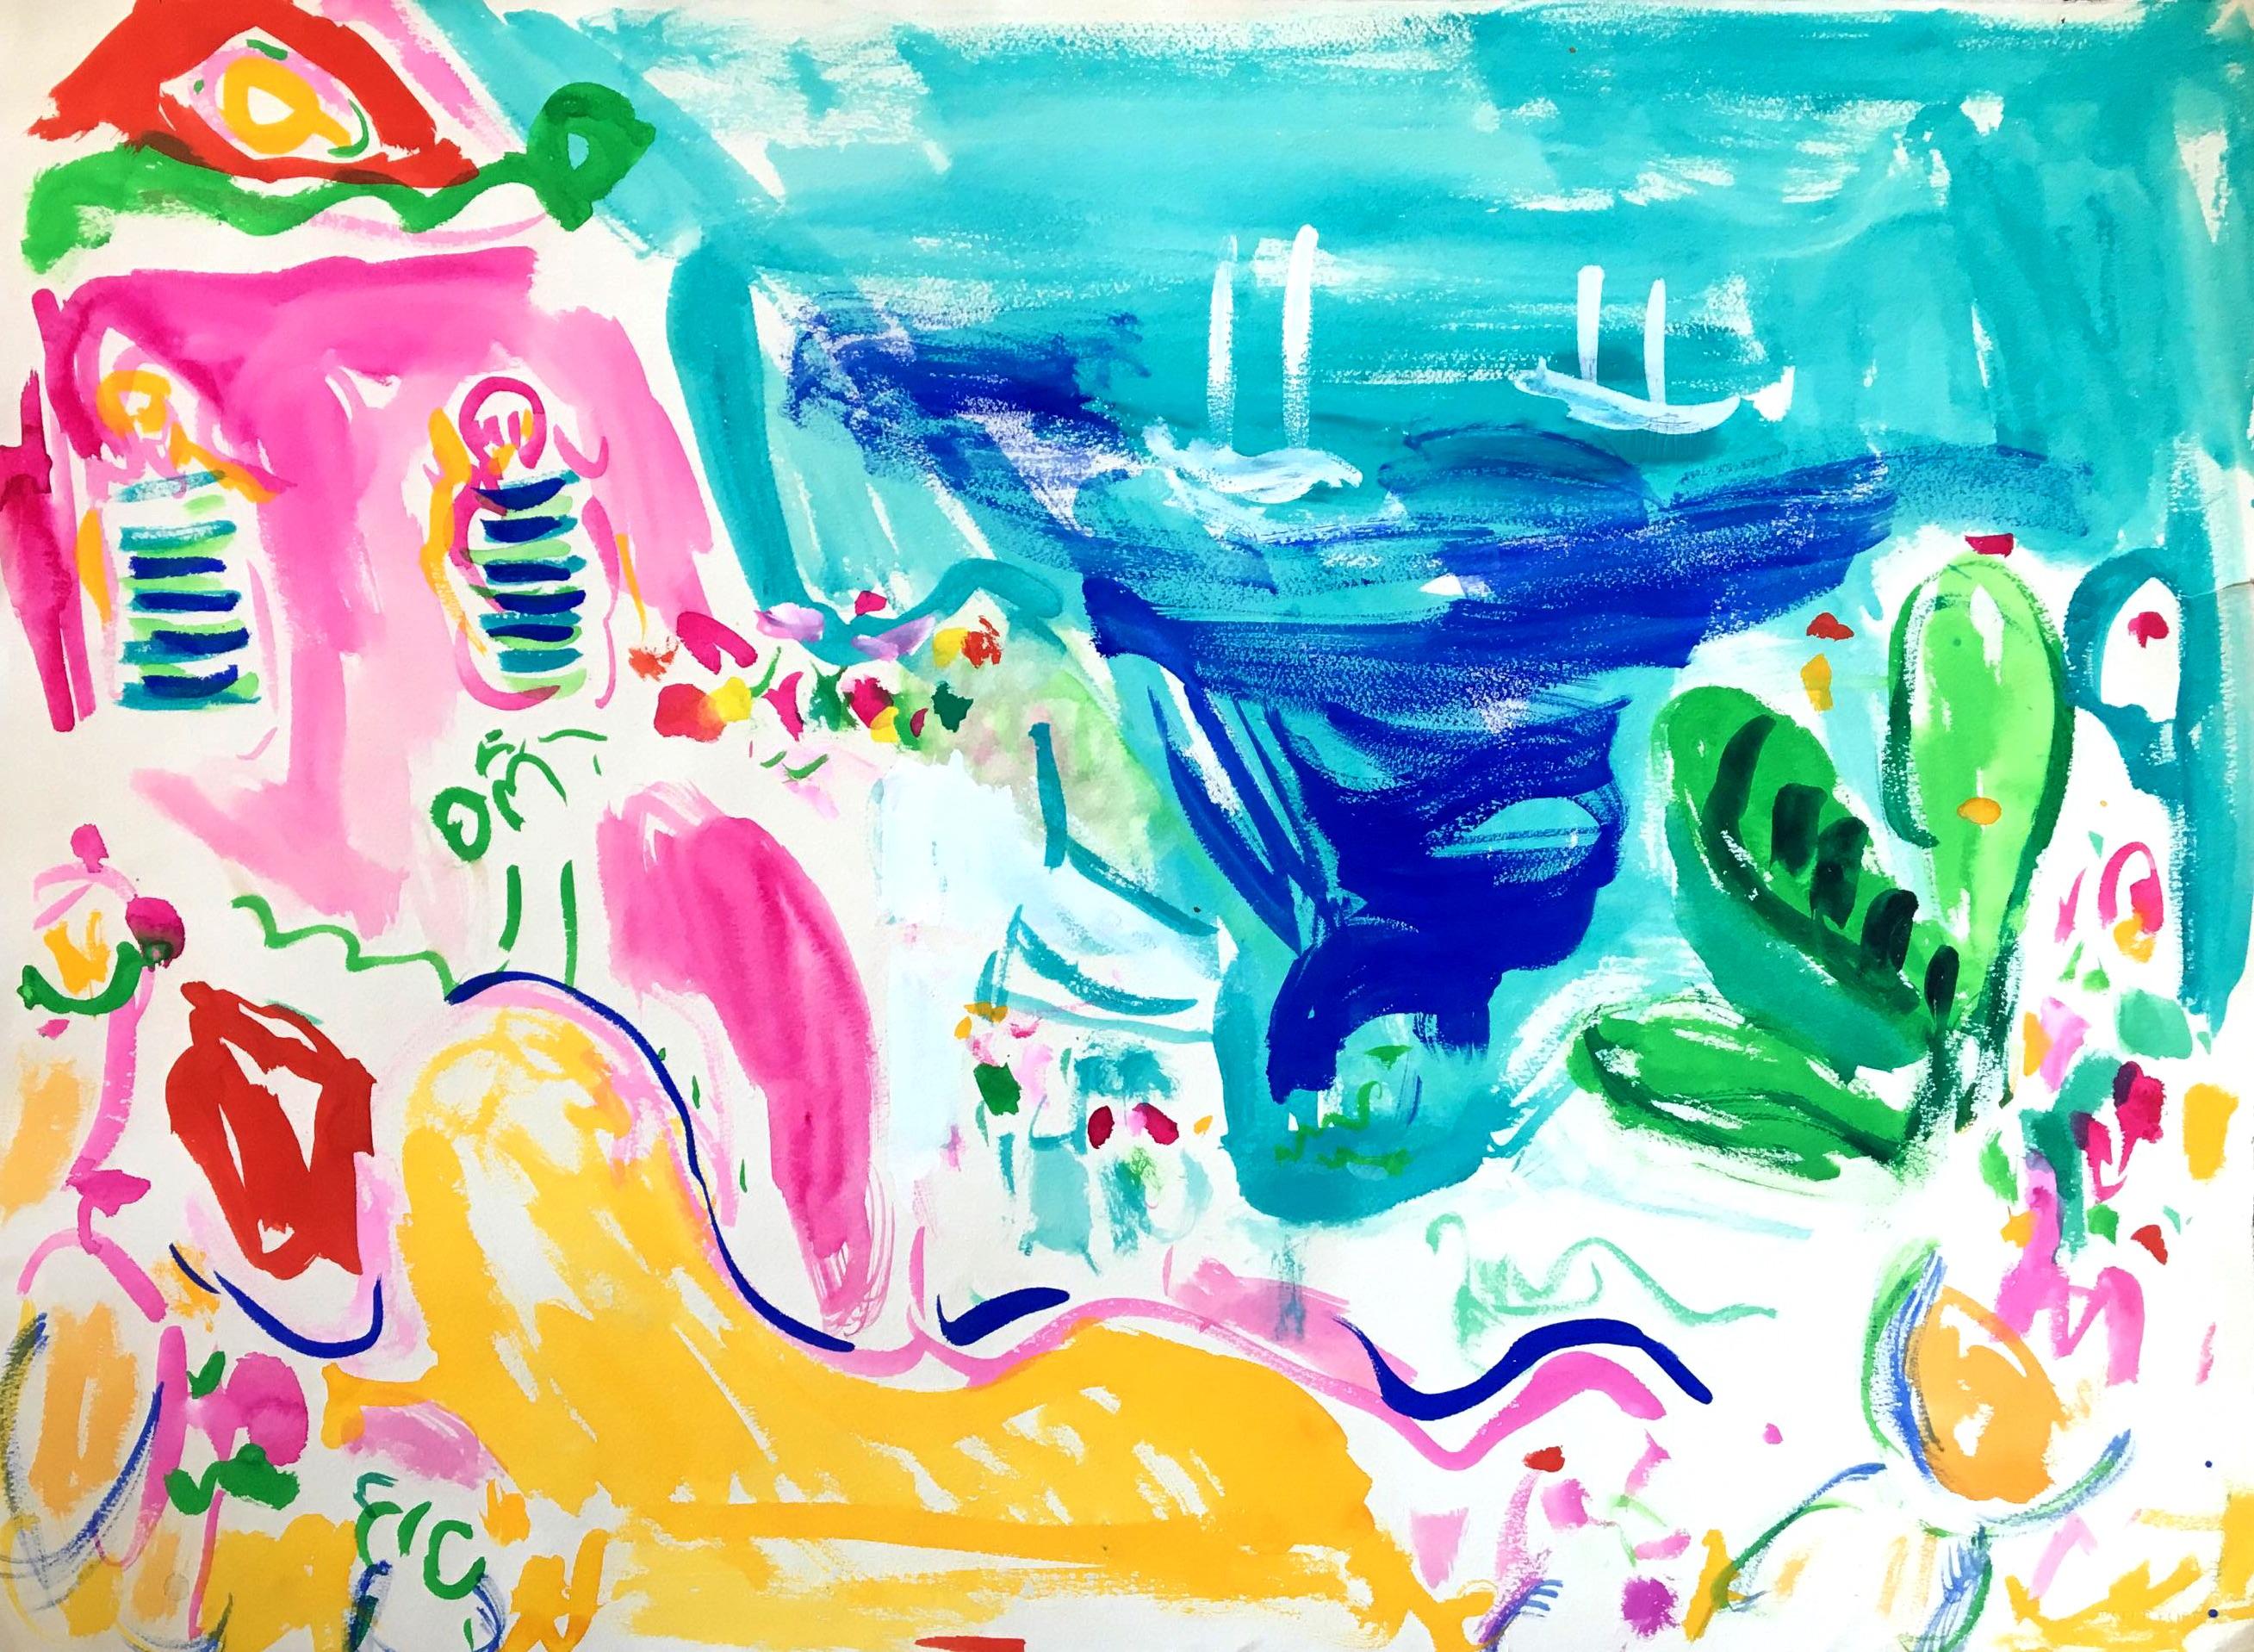 Bob Paul Kane Abstract Drawing – Positano House Terrace & Sea, 2000er Jahre